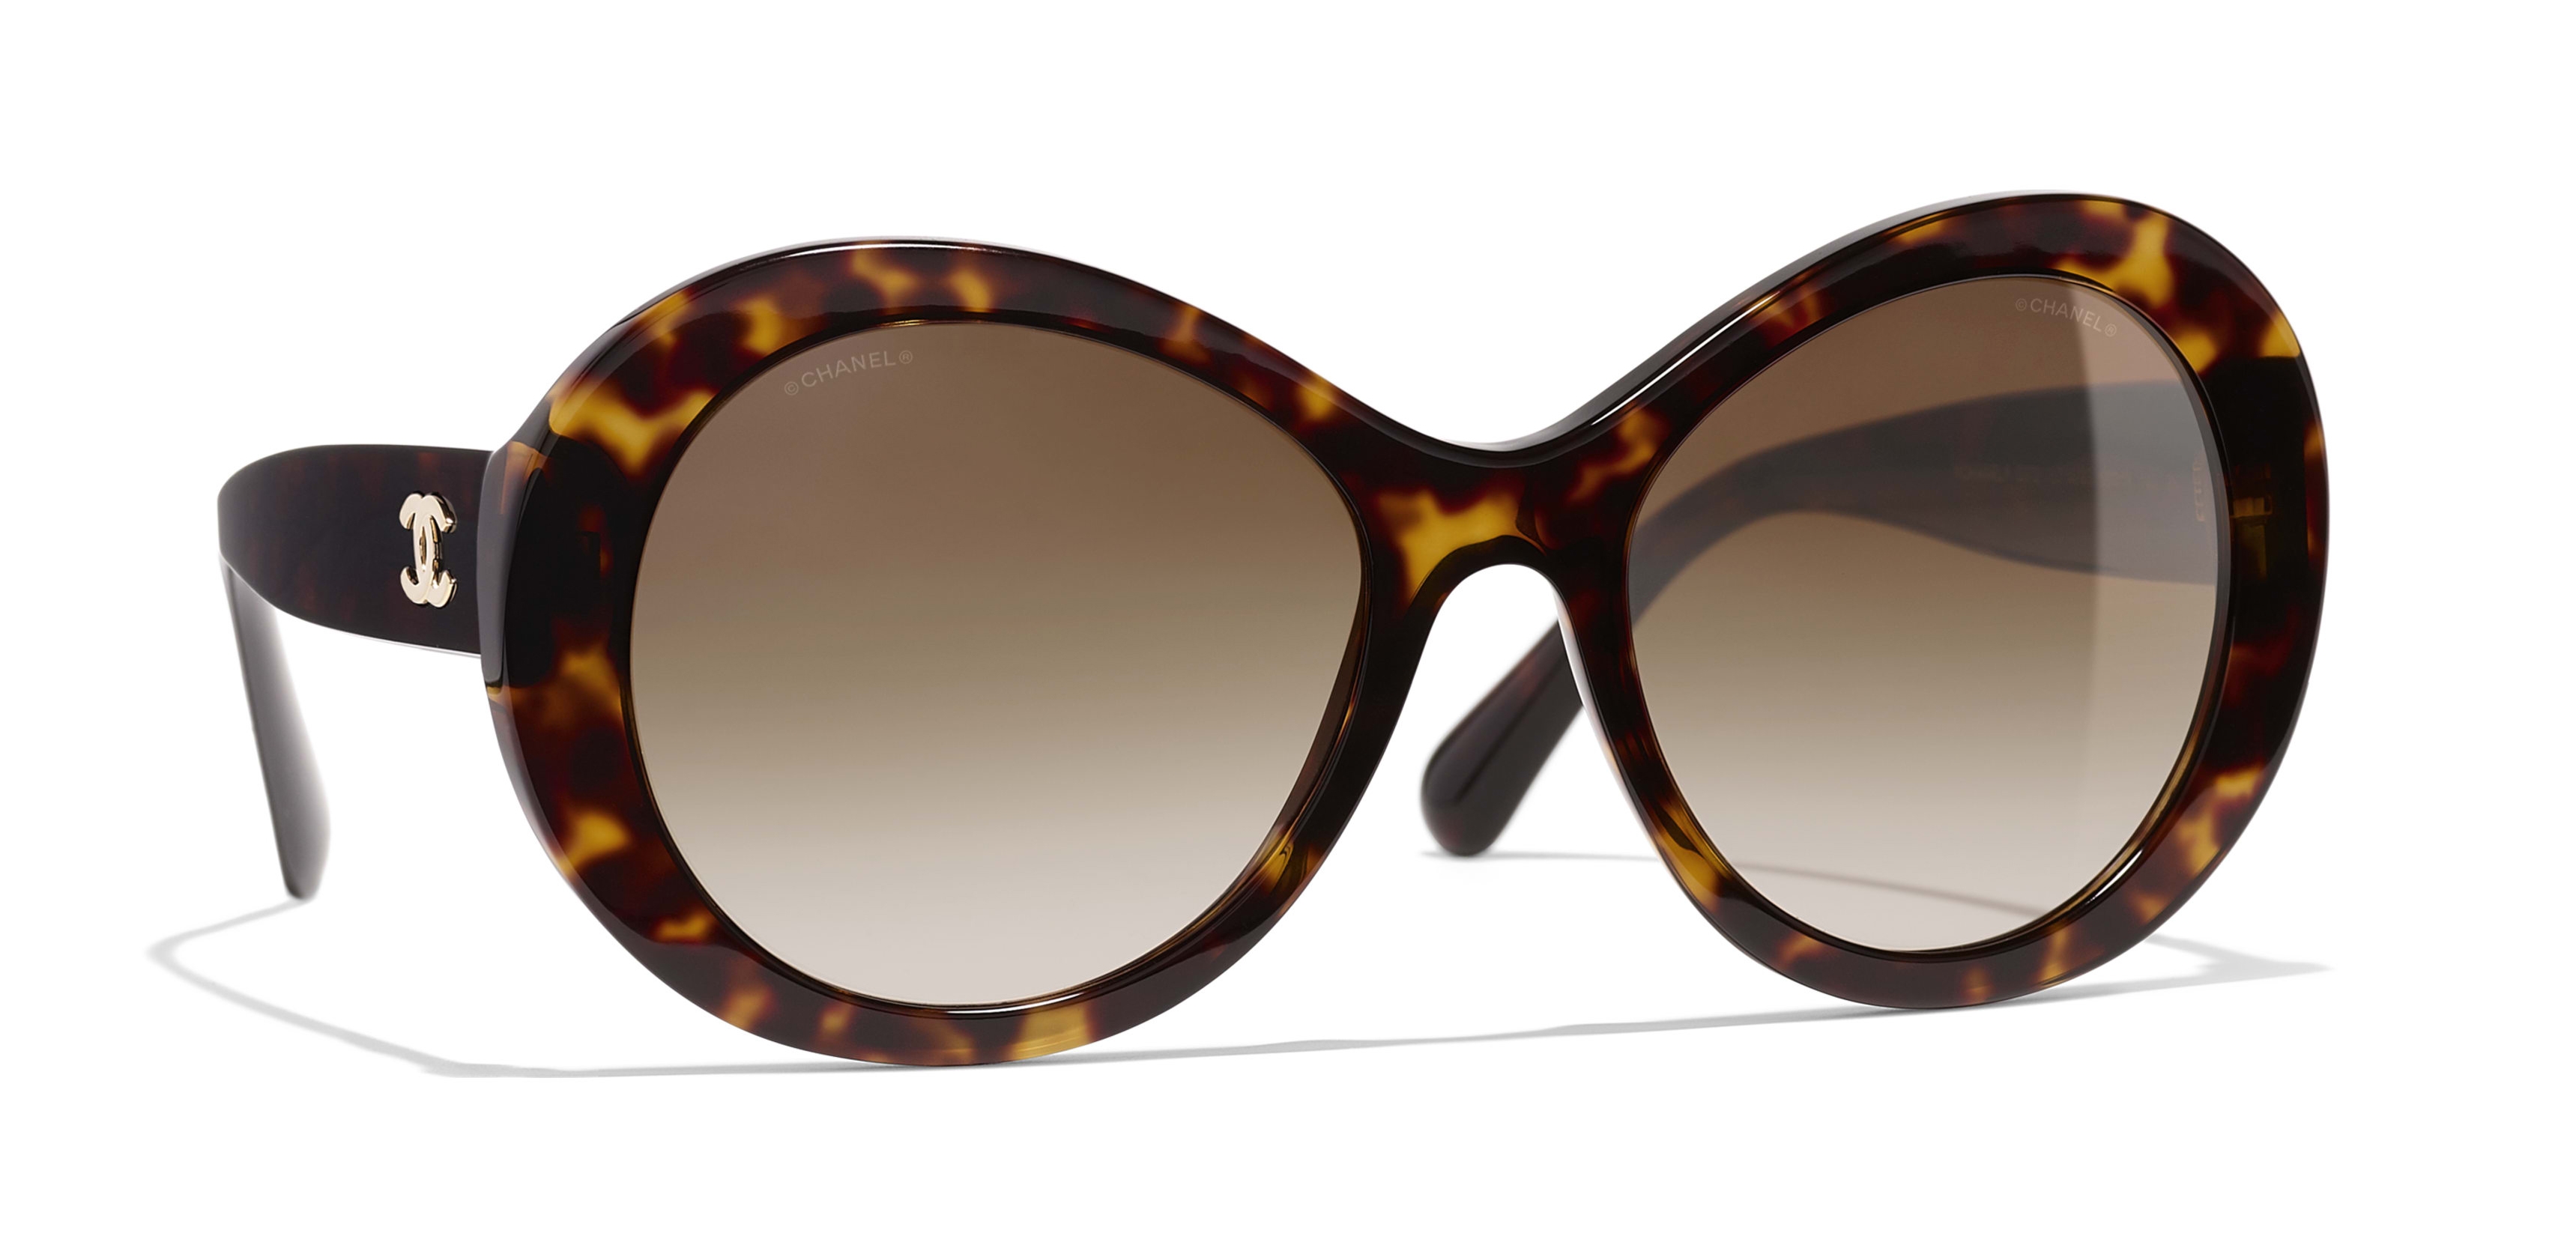 Chanel - Oval Sunglasses - Dark Tortoise Brown - Chanel Eyewear - Avvenice